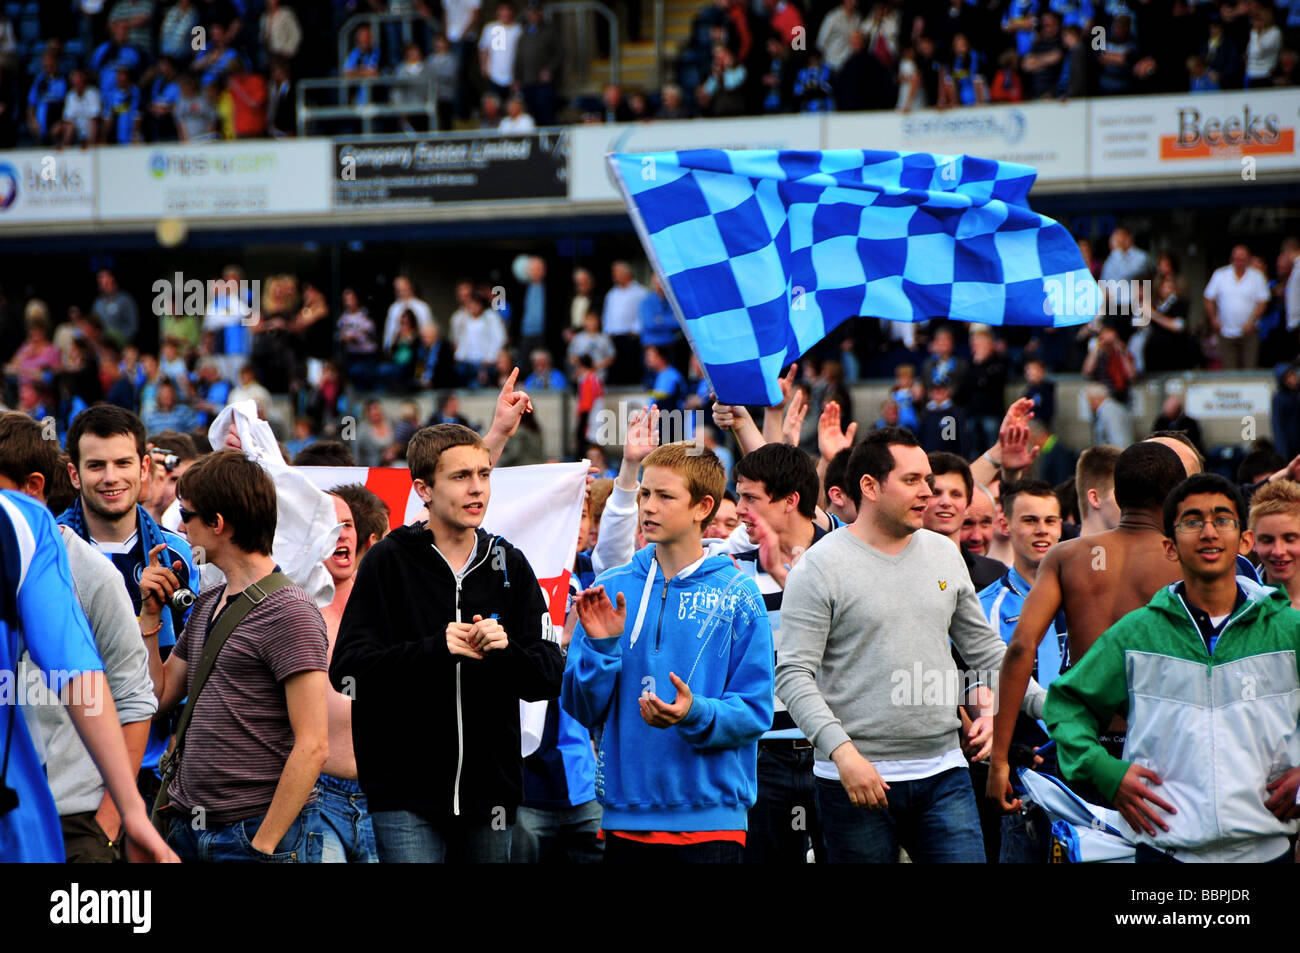 Football fans celebrating at Wycombe Wanderers Football Club, May 2009  Stock Photo - Alamy